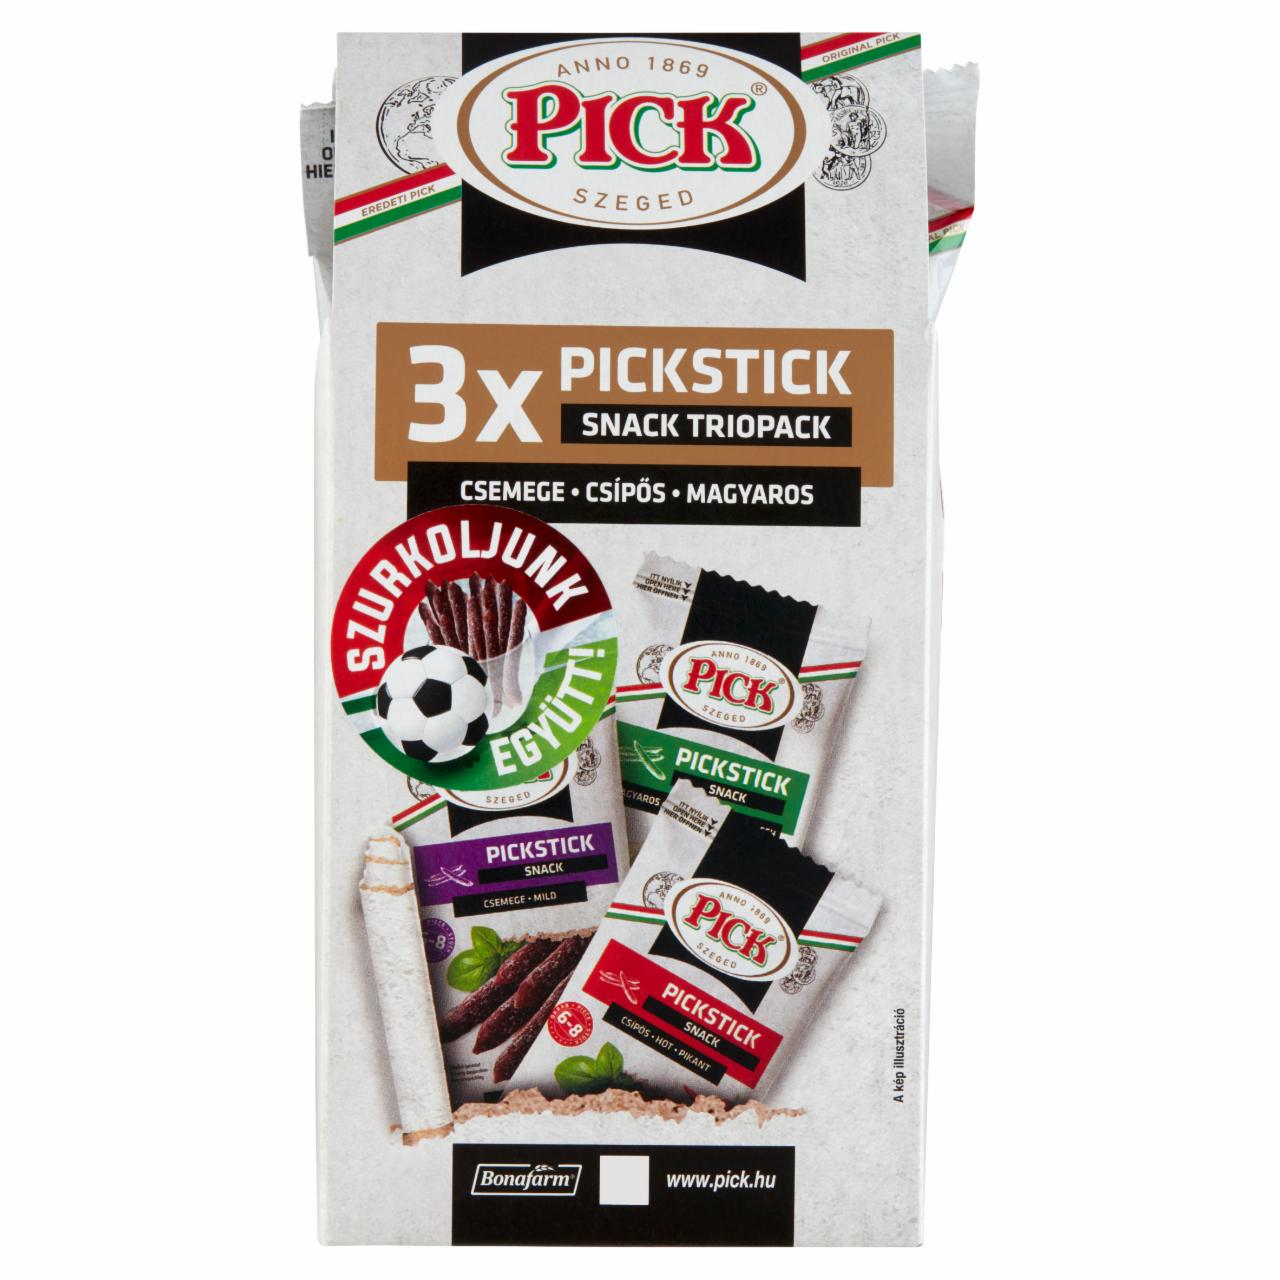 Képek - PICK Pickstick snack triopack 3 x 60 g (180 g)